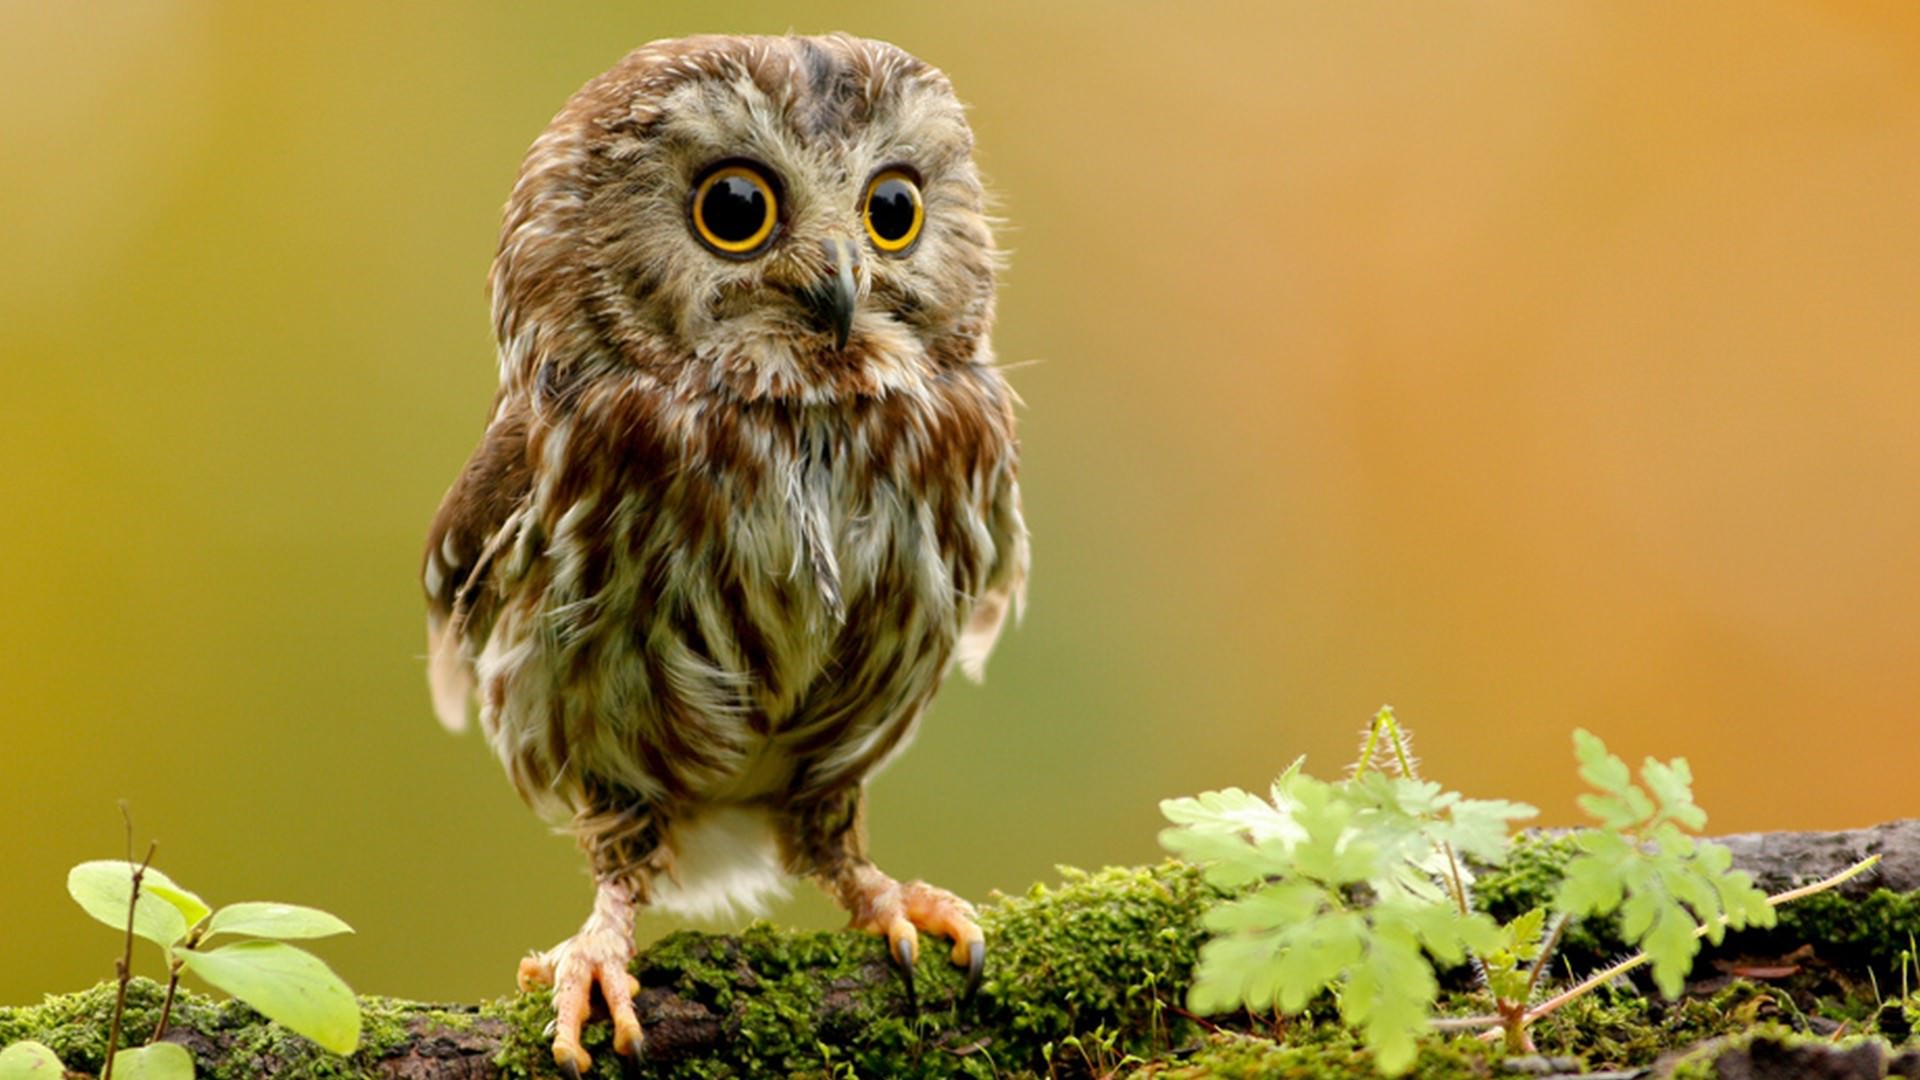 Cute Owl Bird On Branch